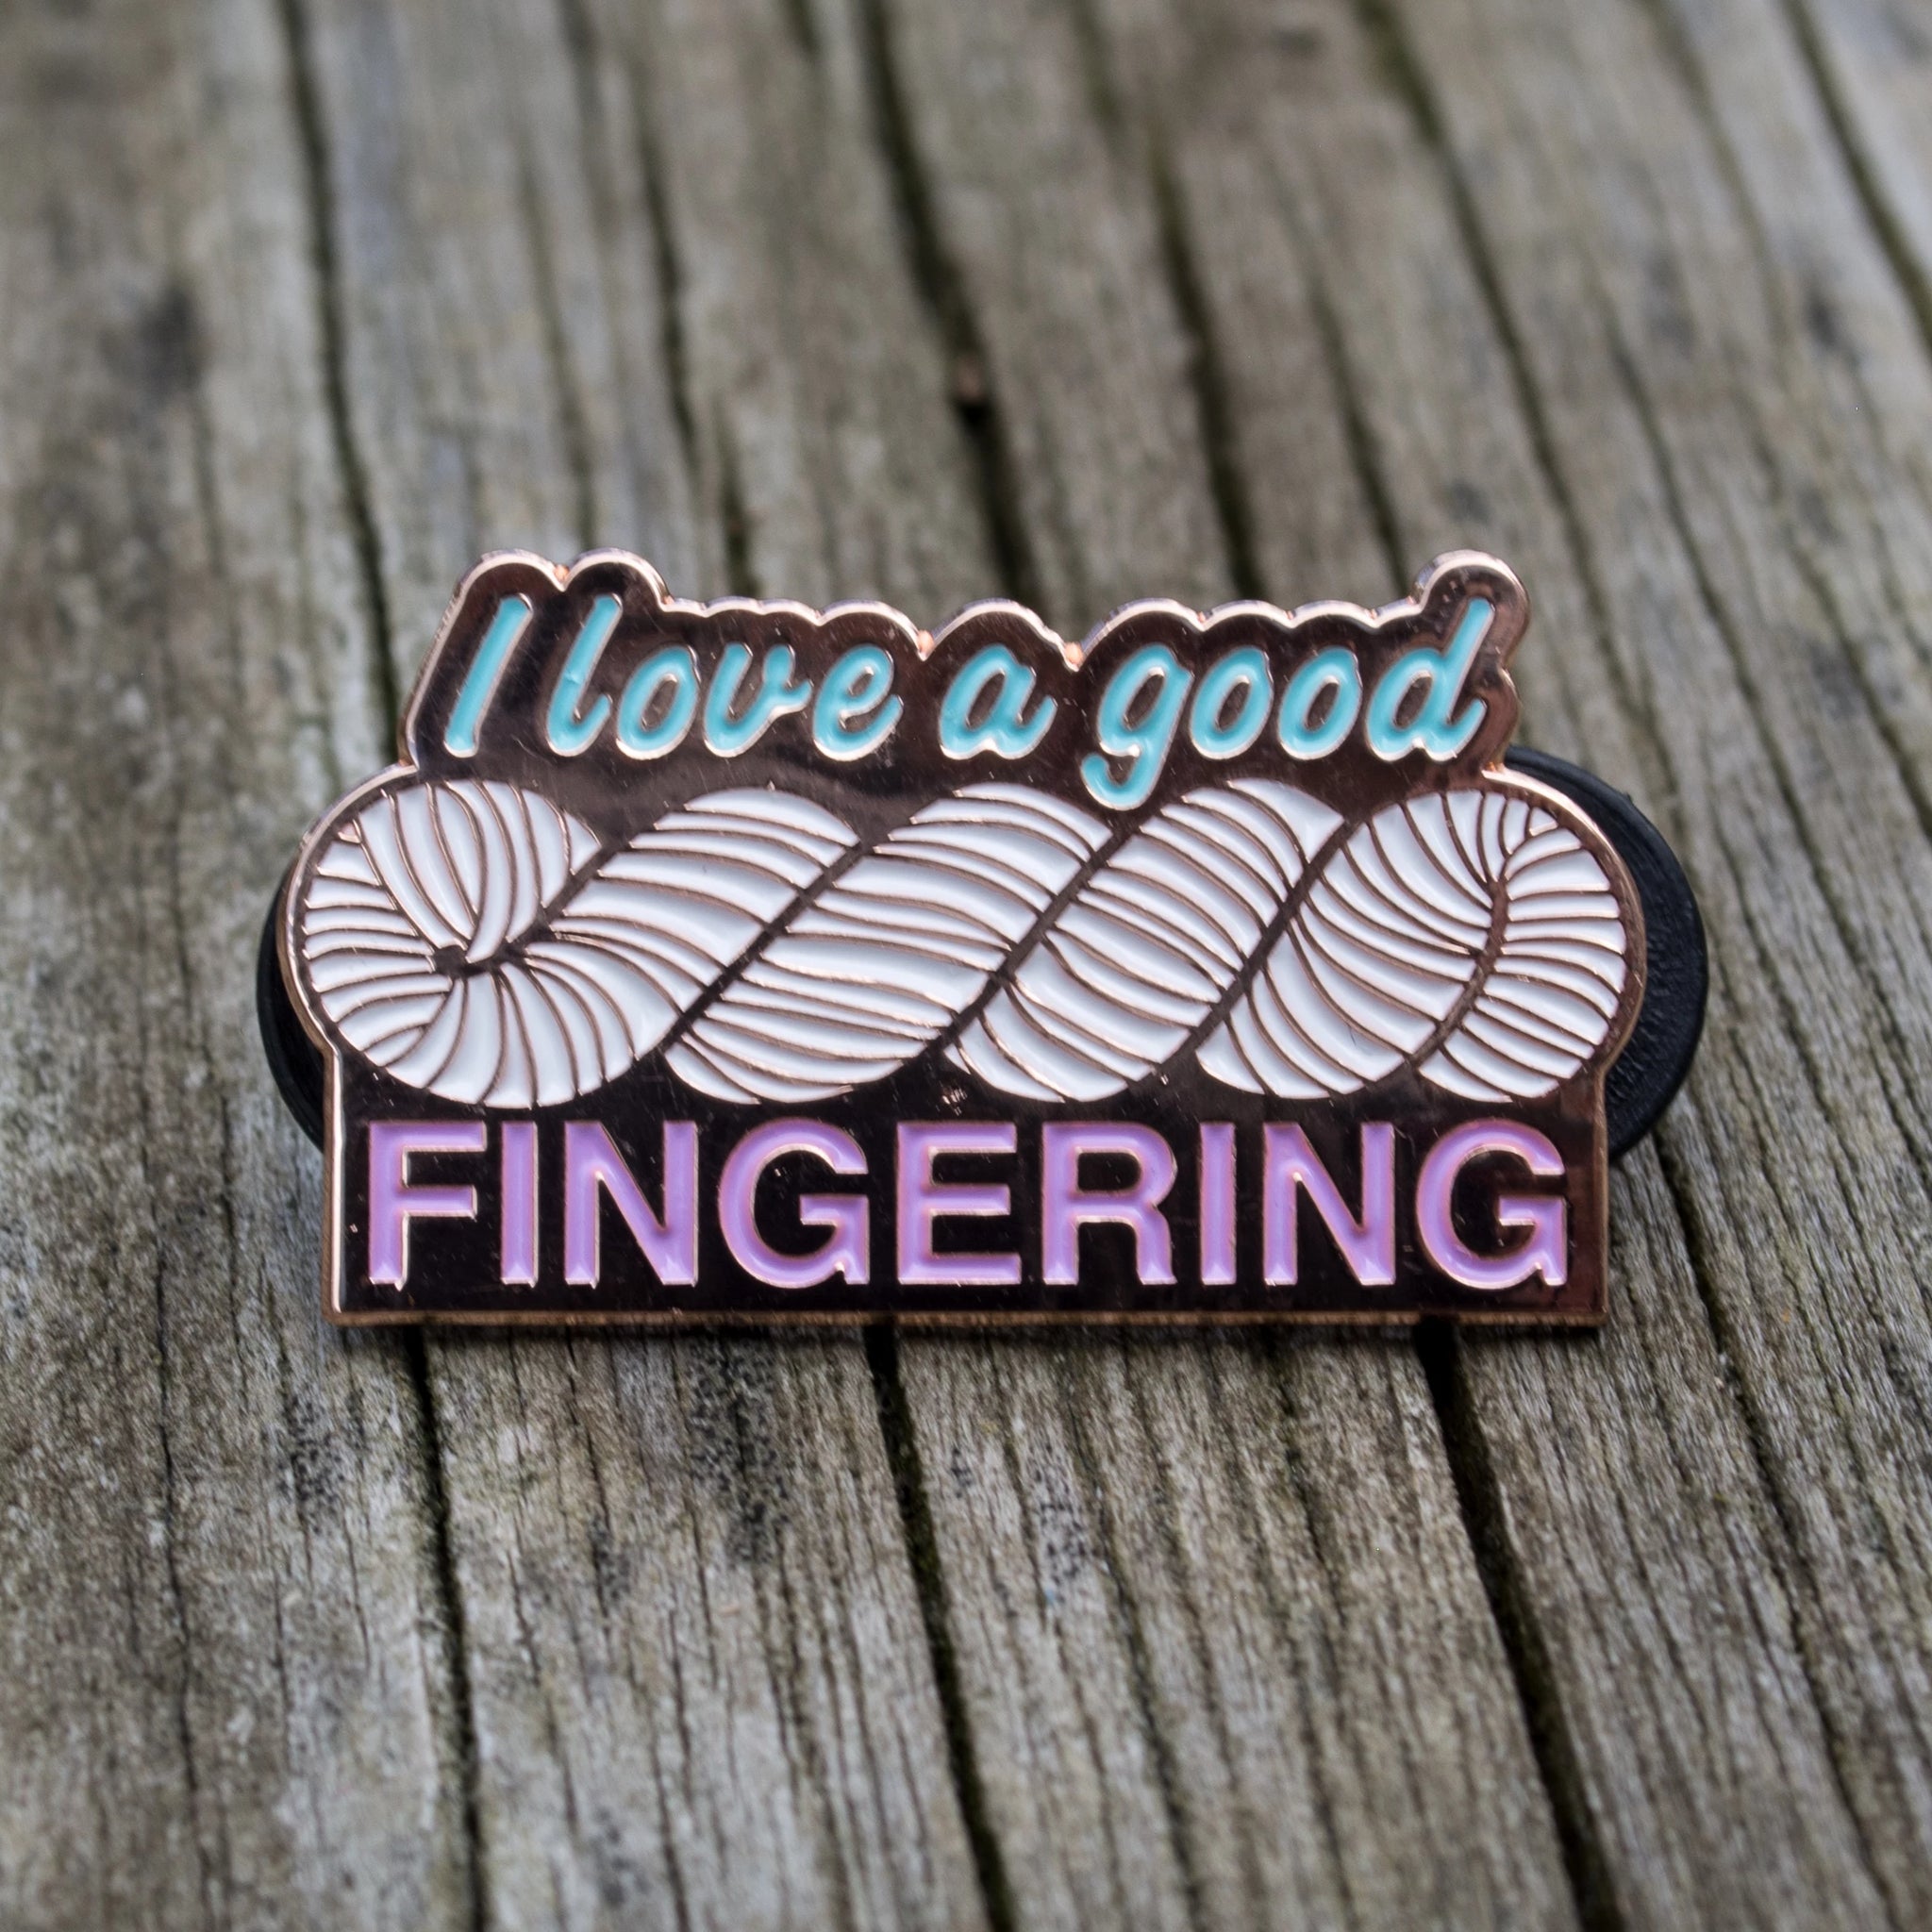 A good fingering